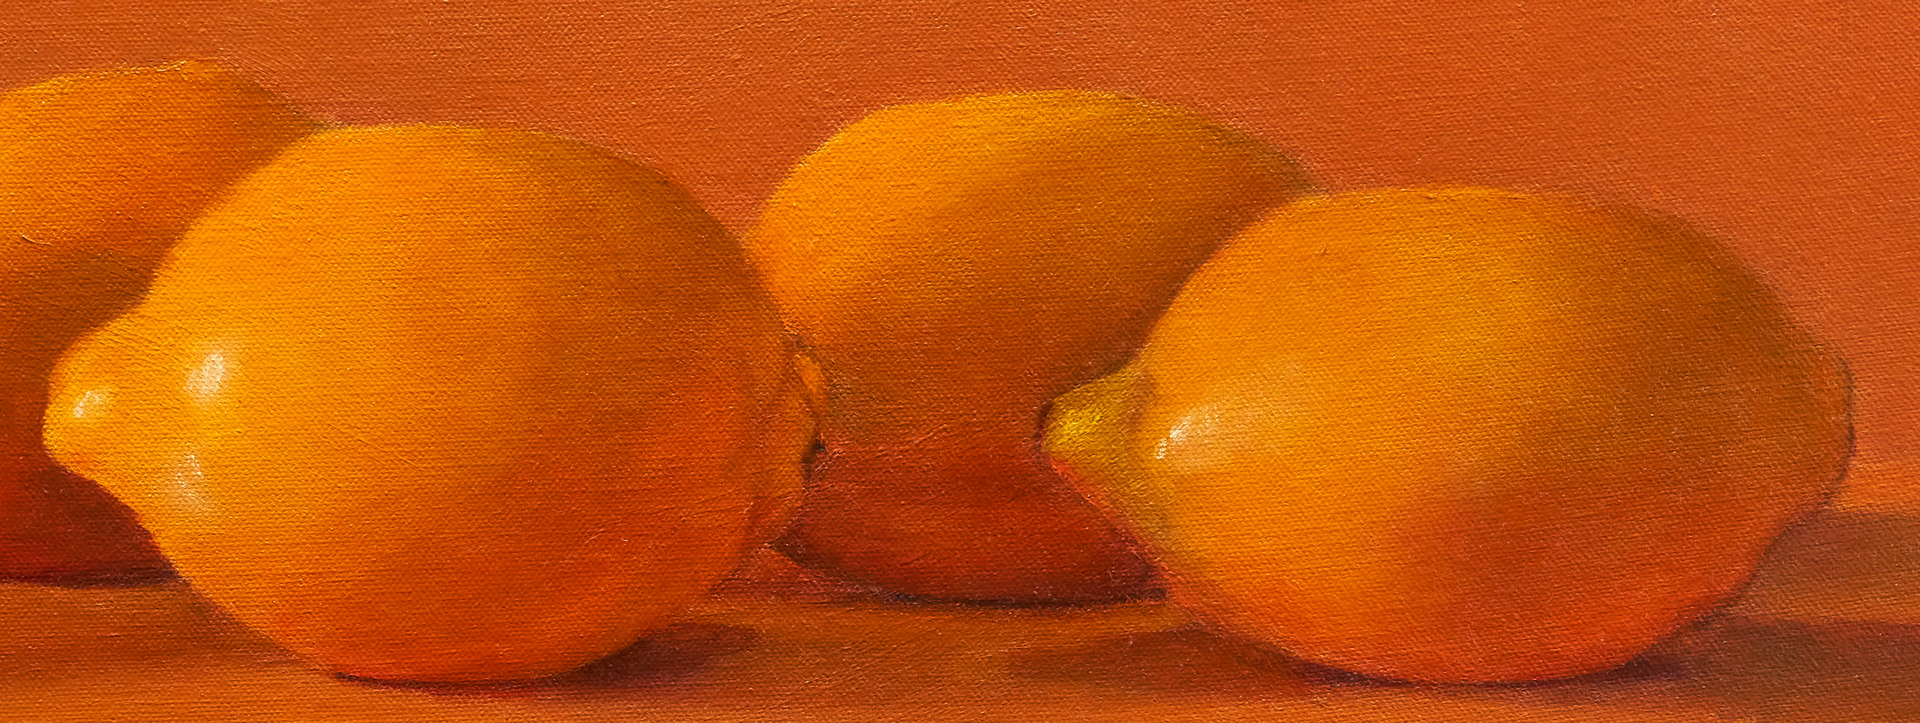 Lot 577: Ray Kleinlein, Oil on Canvas Still Life, Lemons